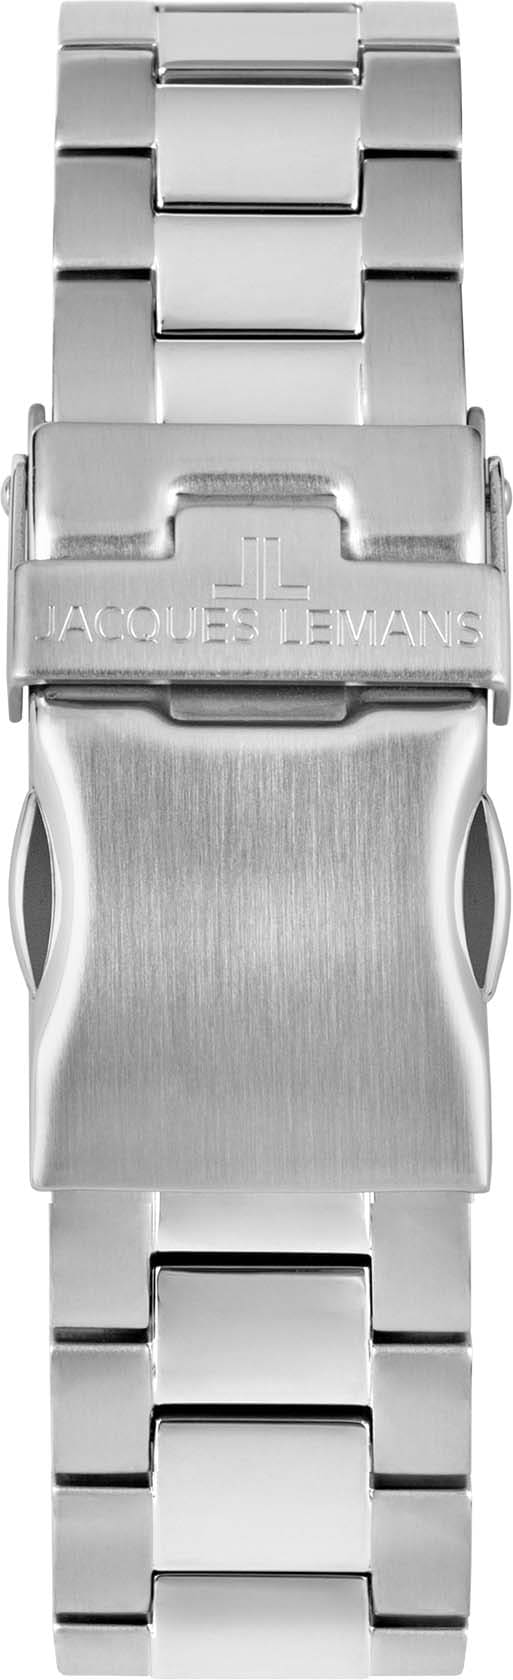 Jacques Lemans Multifunktionsuhr »42-11F« kaufen | I'm walking